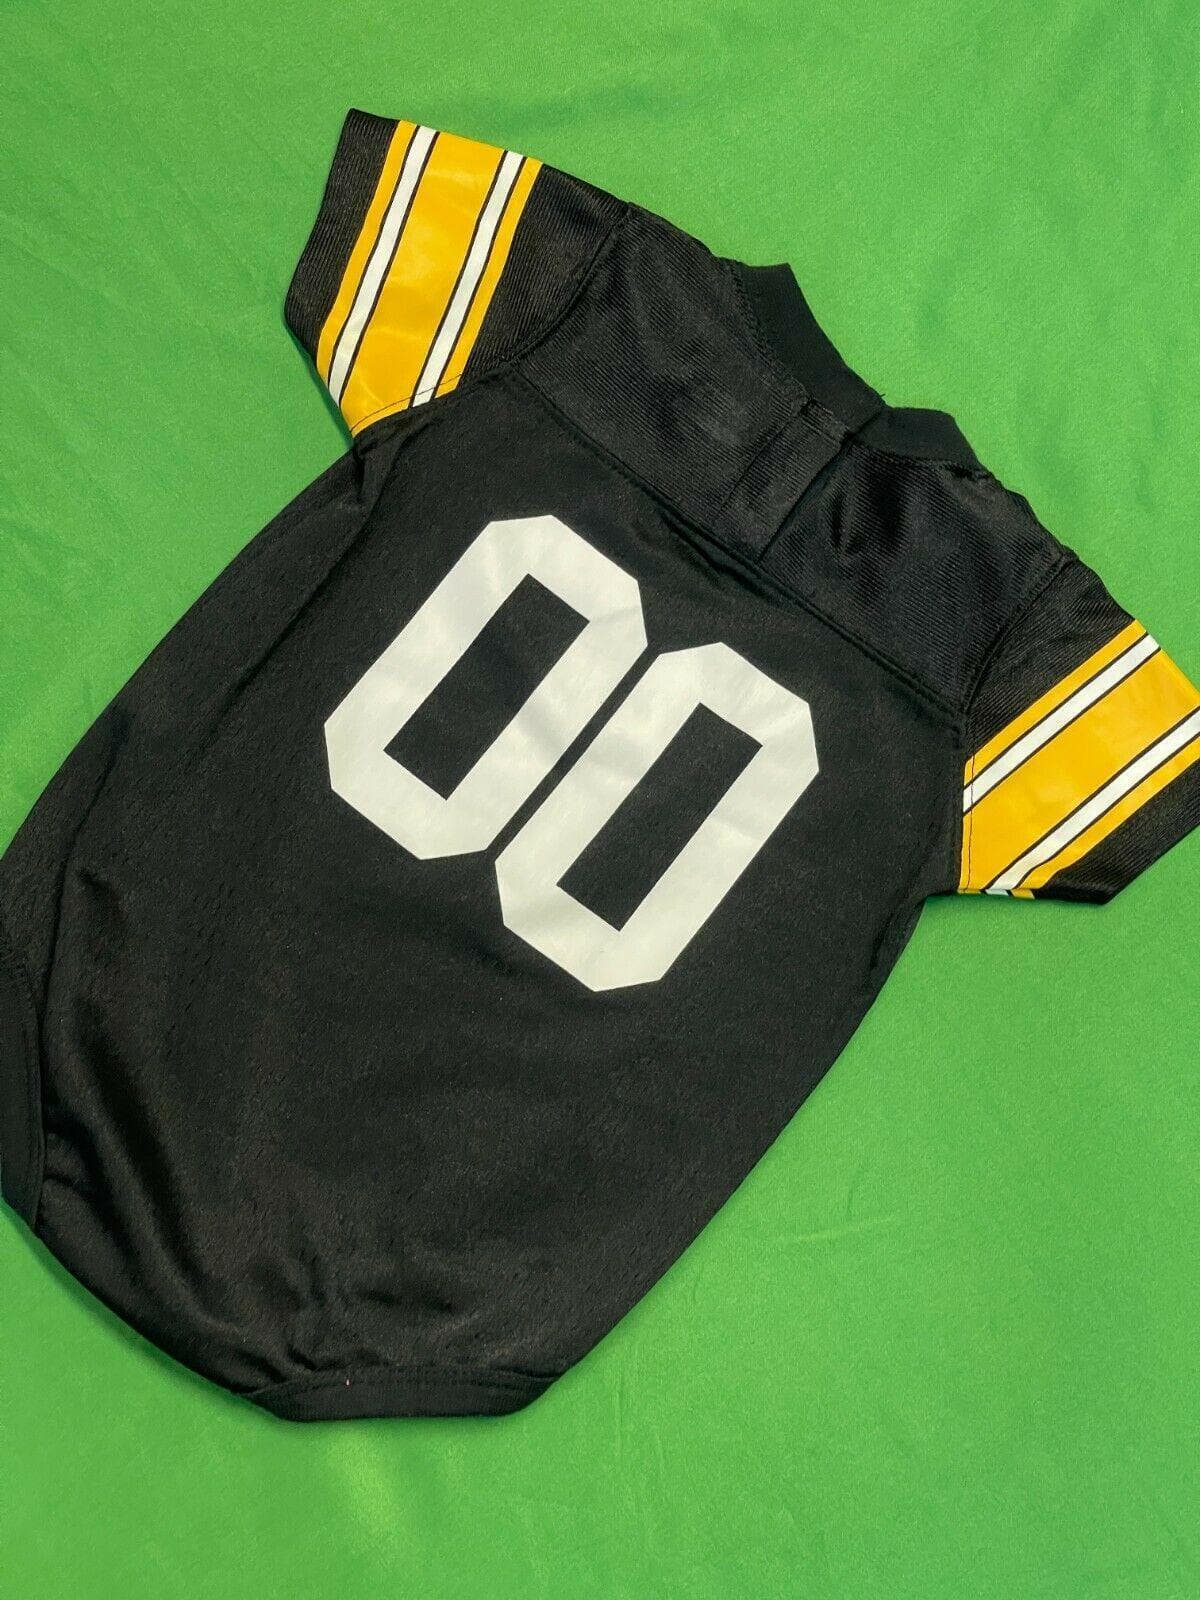 NCAA Iowa Hawkeyes #00 Jersey Style Bodysuit/Vest Infant 12 Months